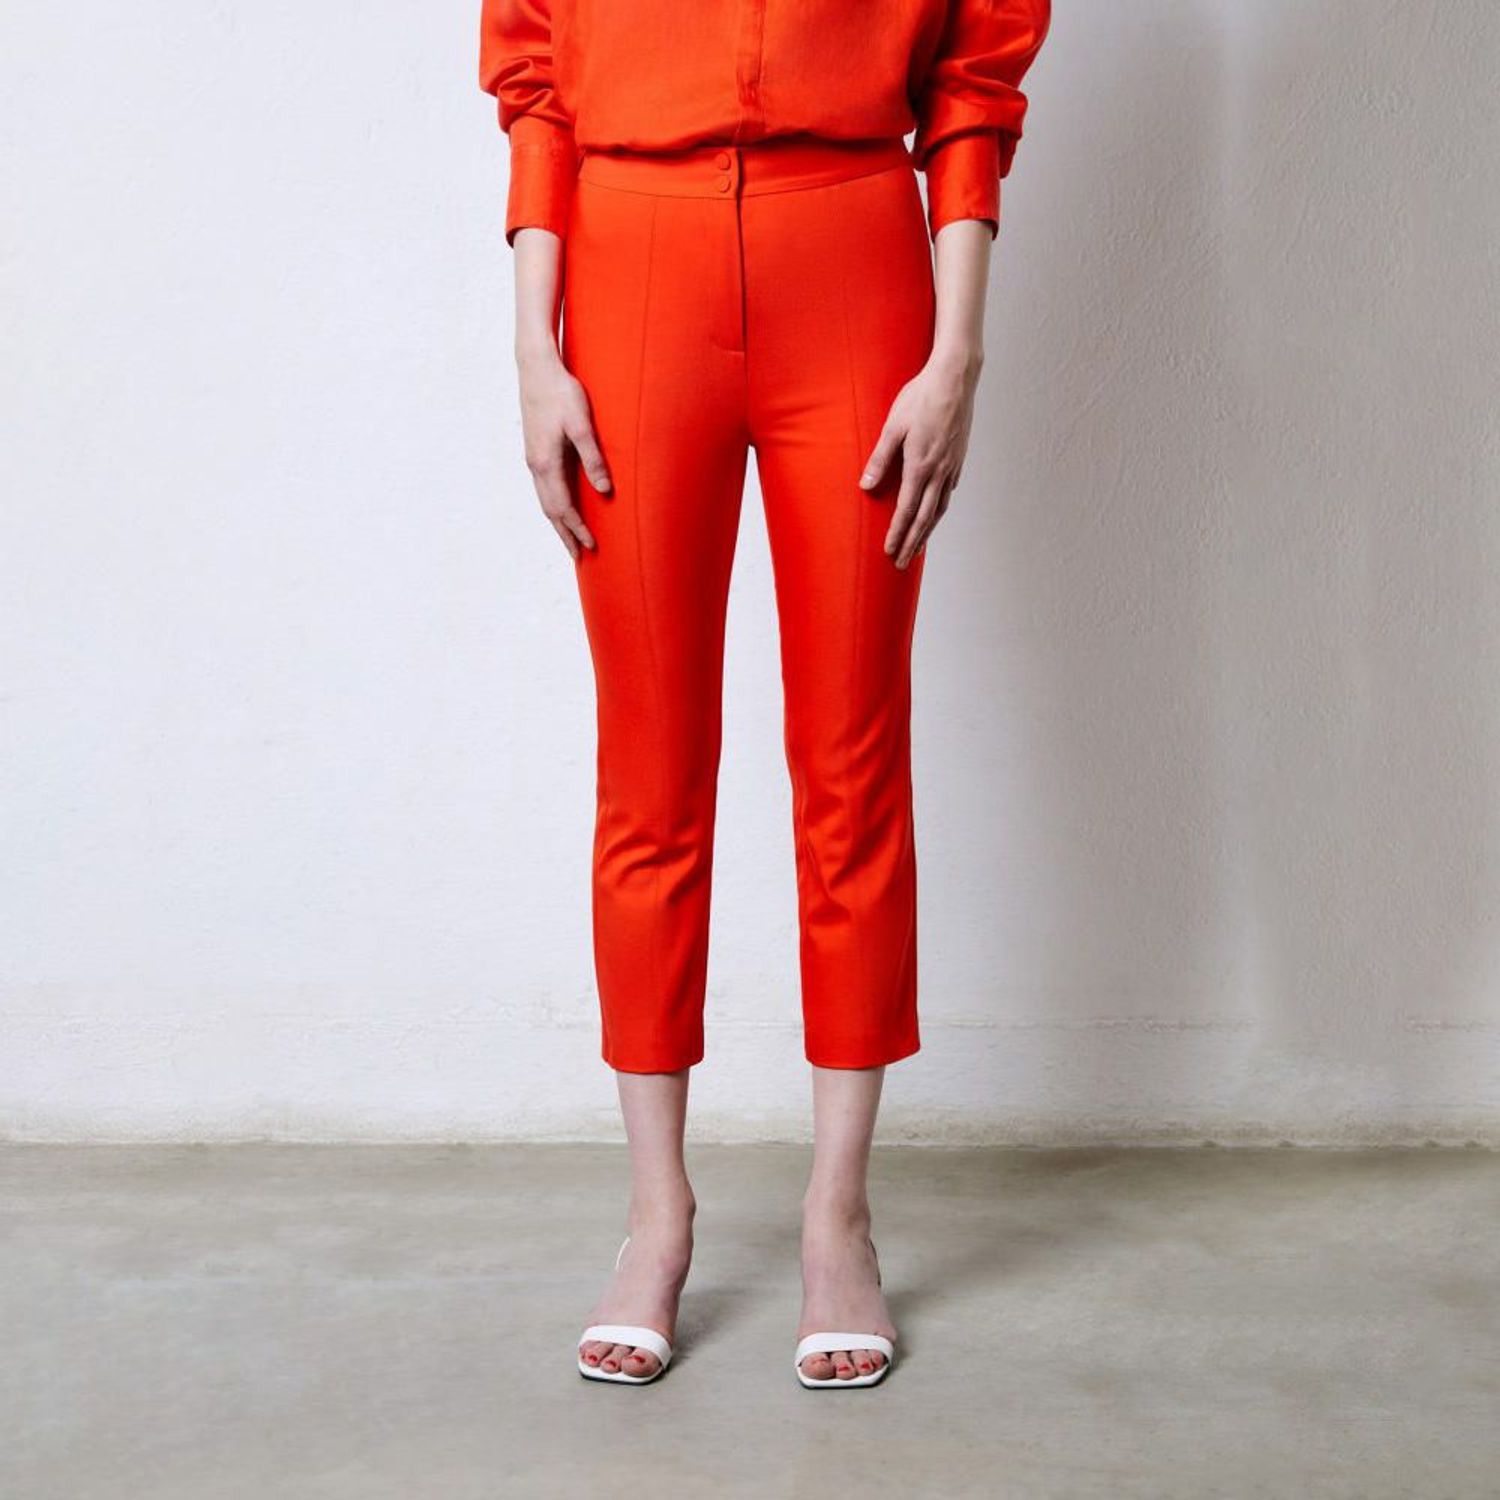 Pantalón de vestir - Naranja - MUJER